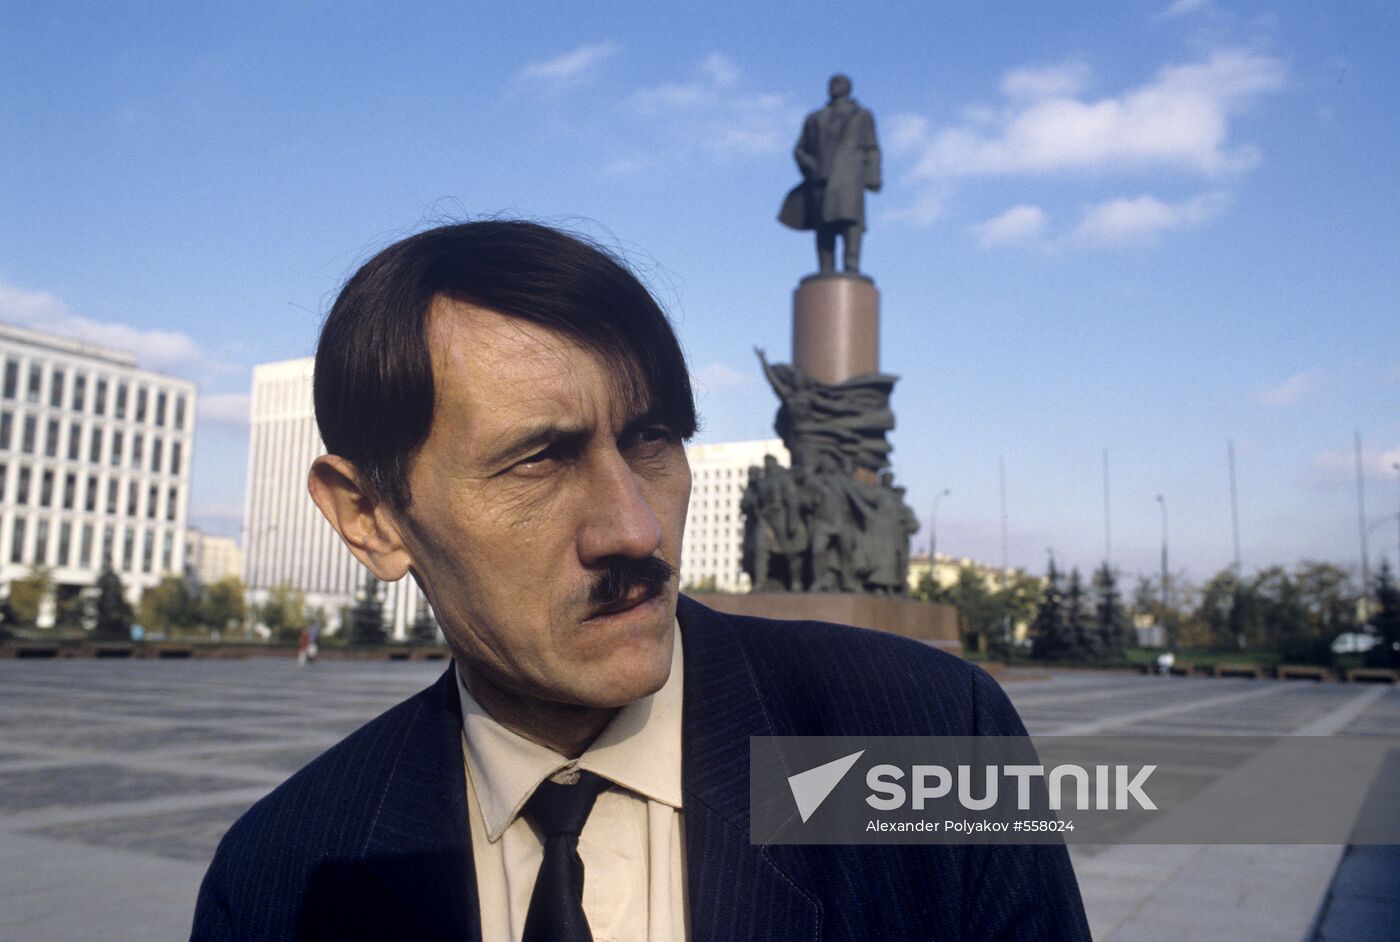 Adolf Hitler's look-alike Alexander Shishkin